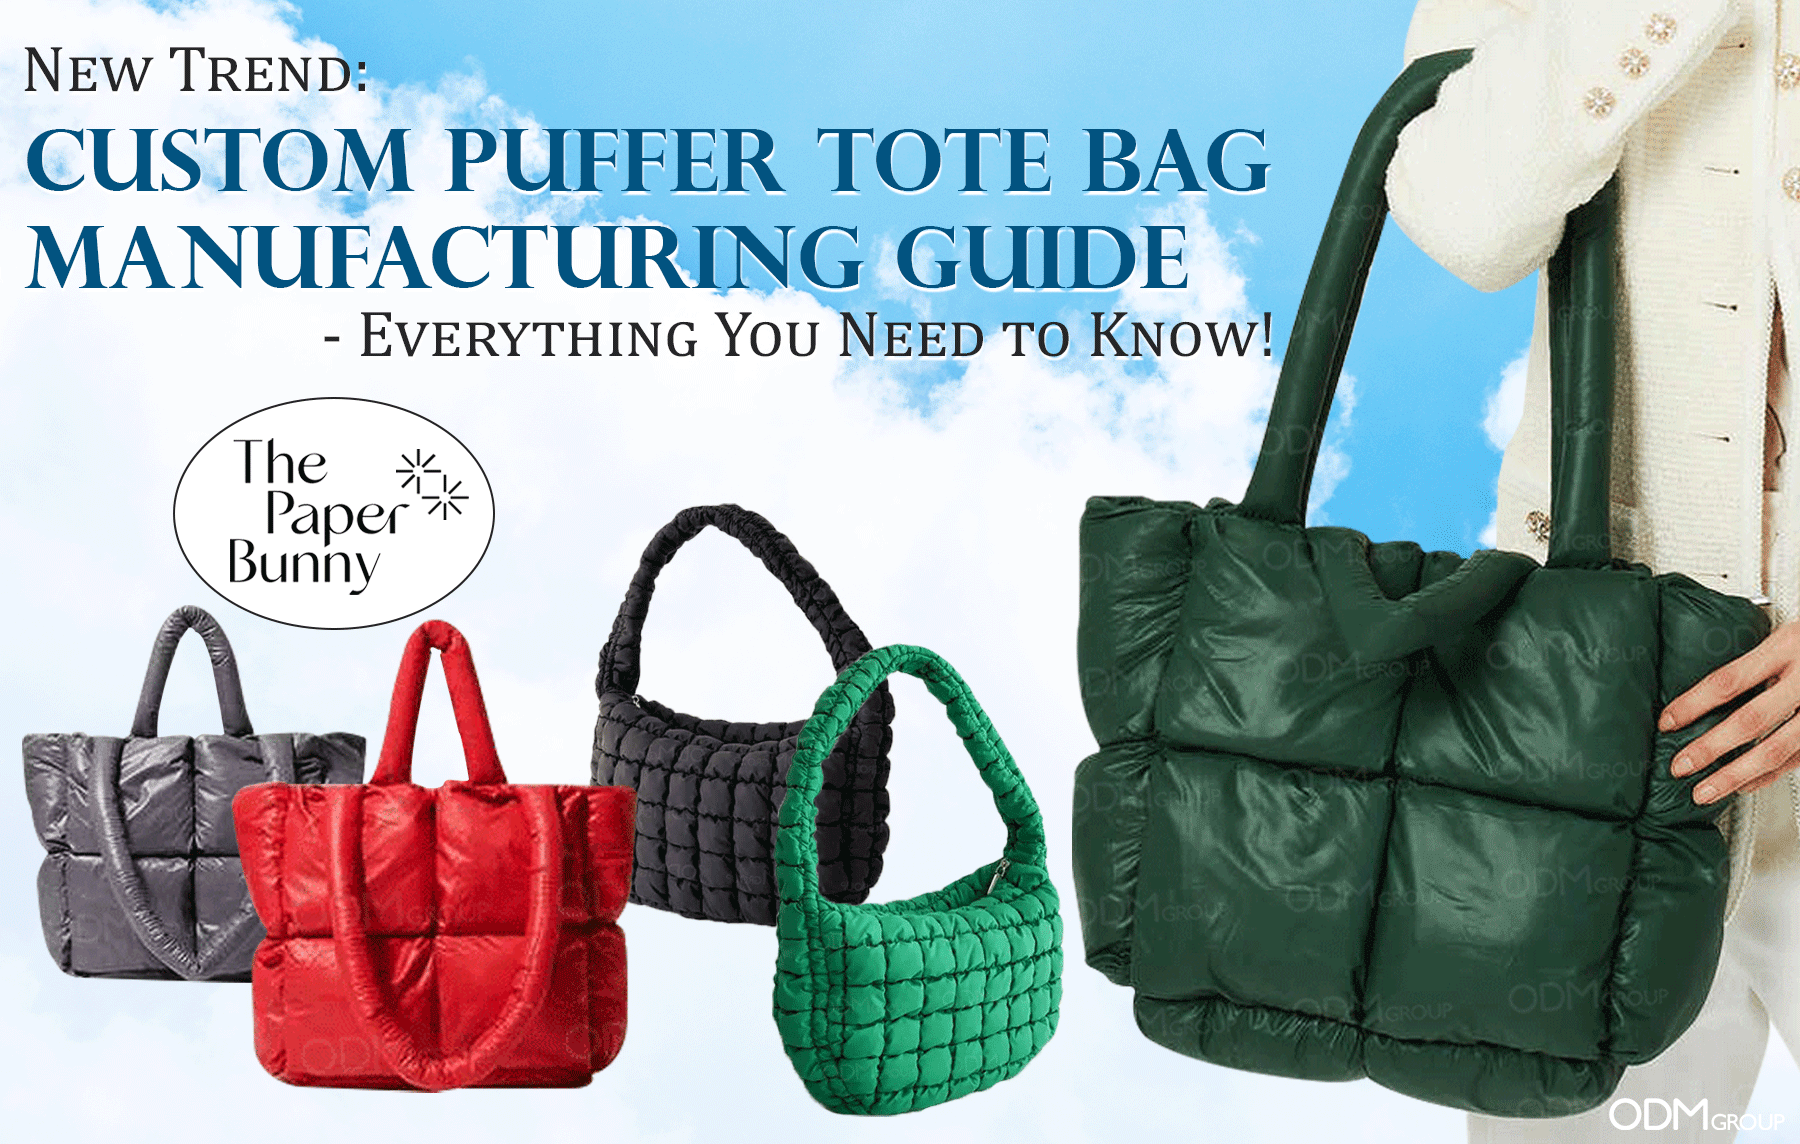 Various custom puffer tote bags in different colors.